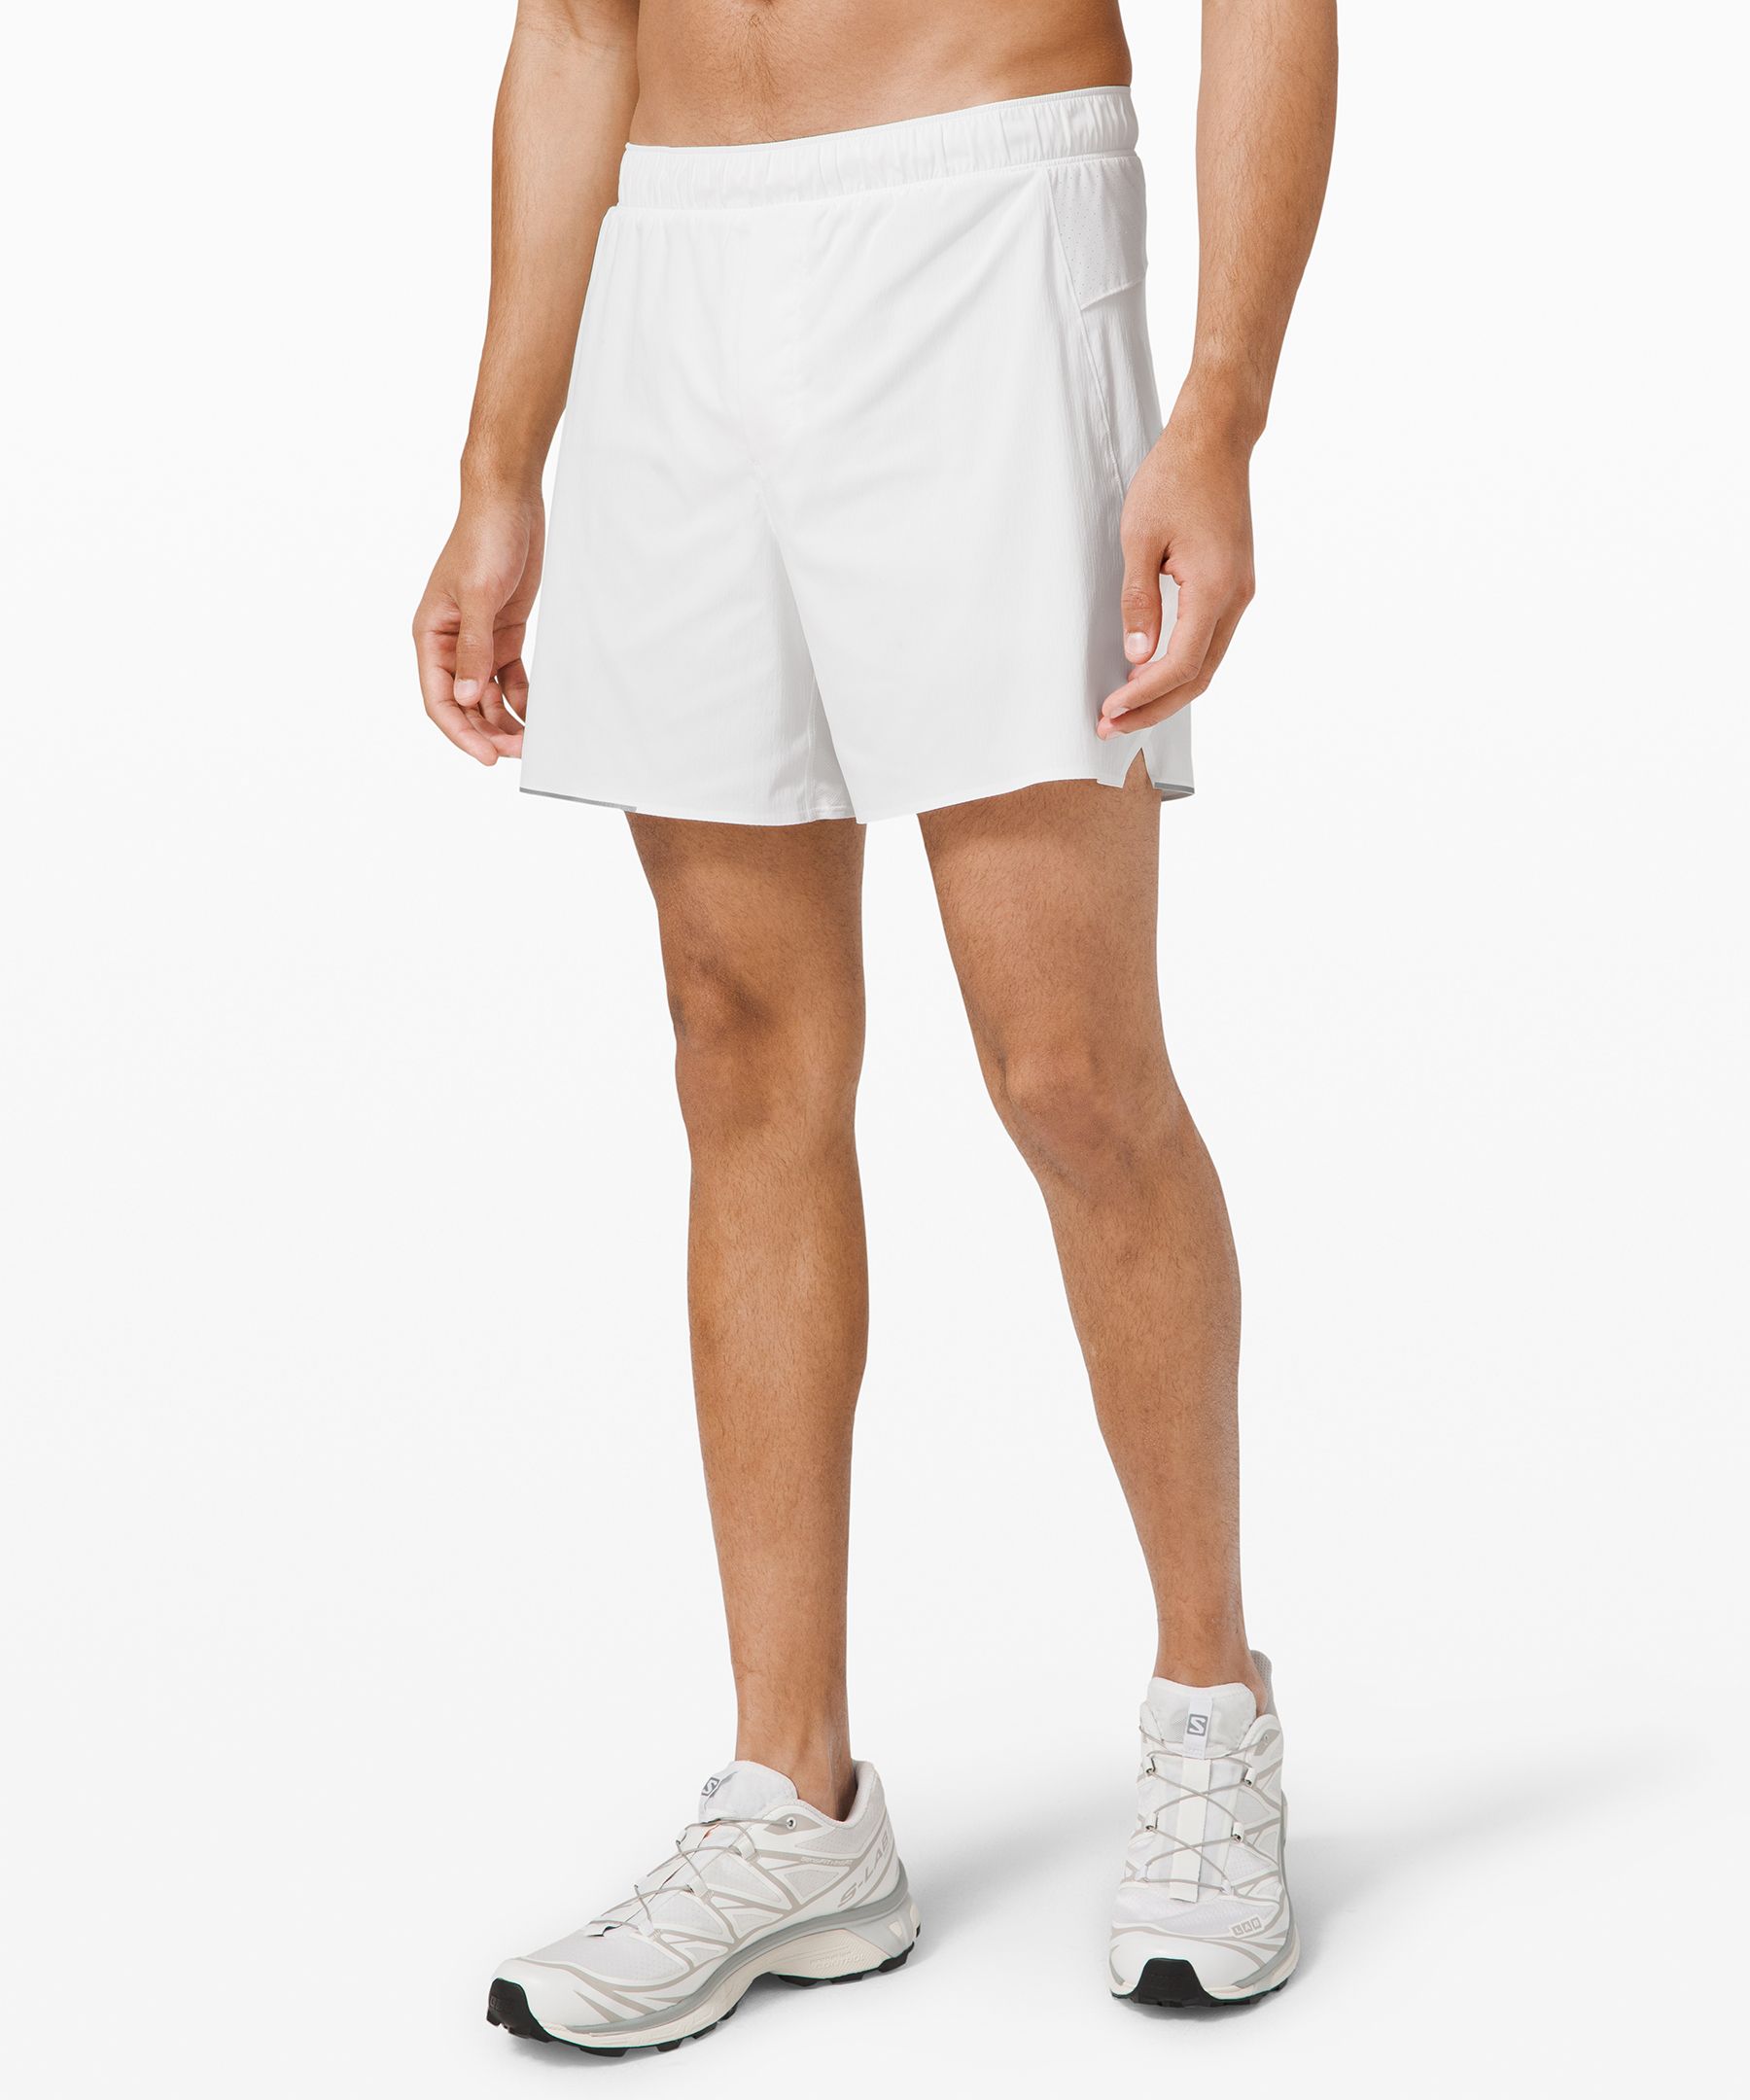 mens white lululemon shorts